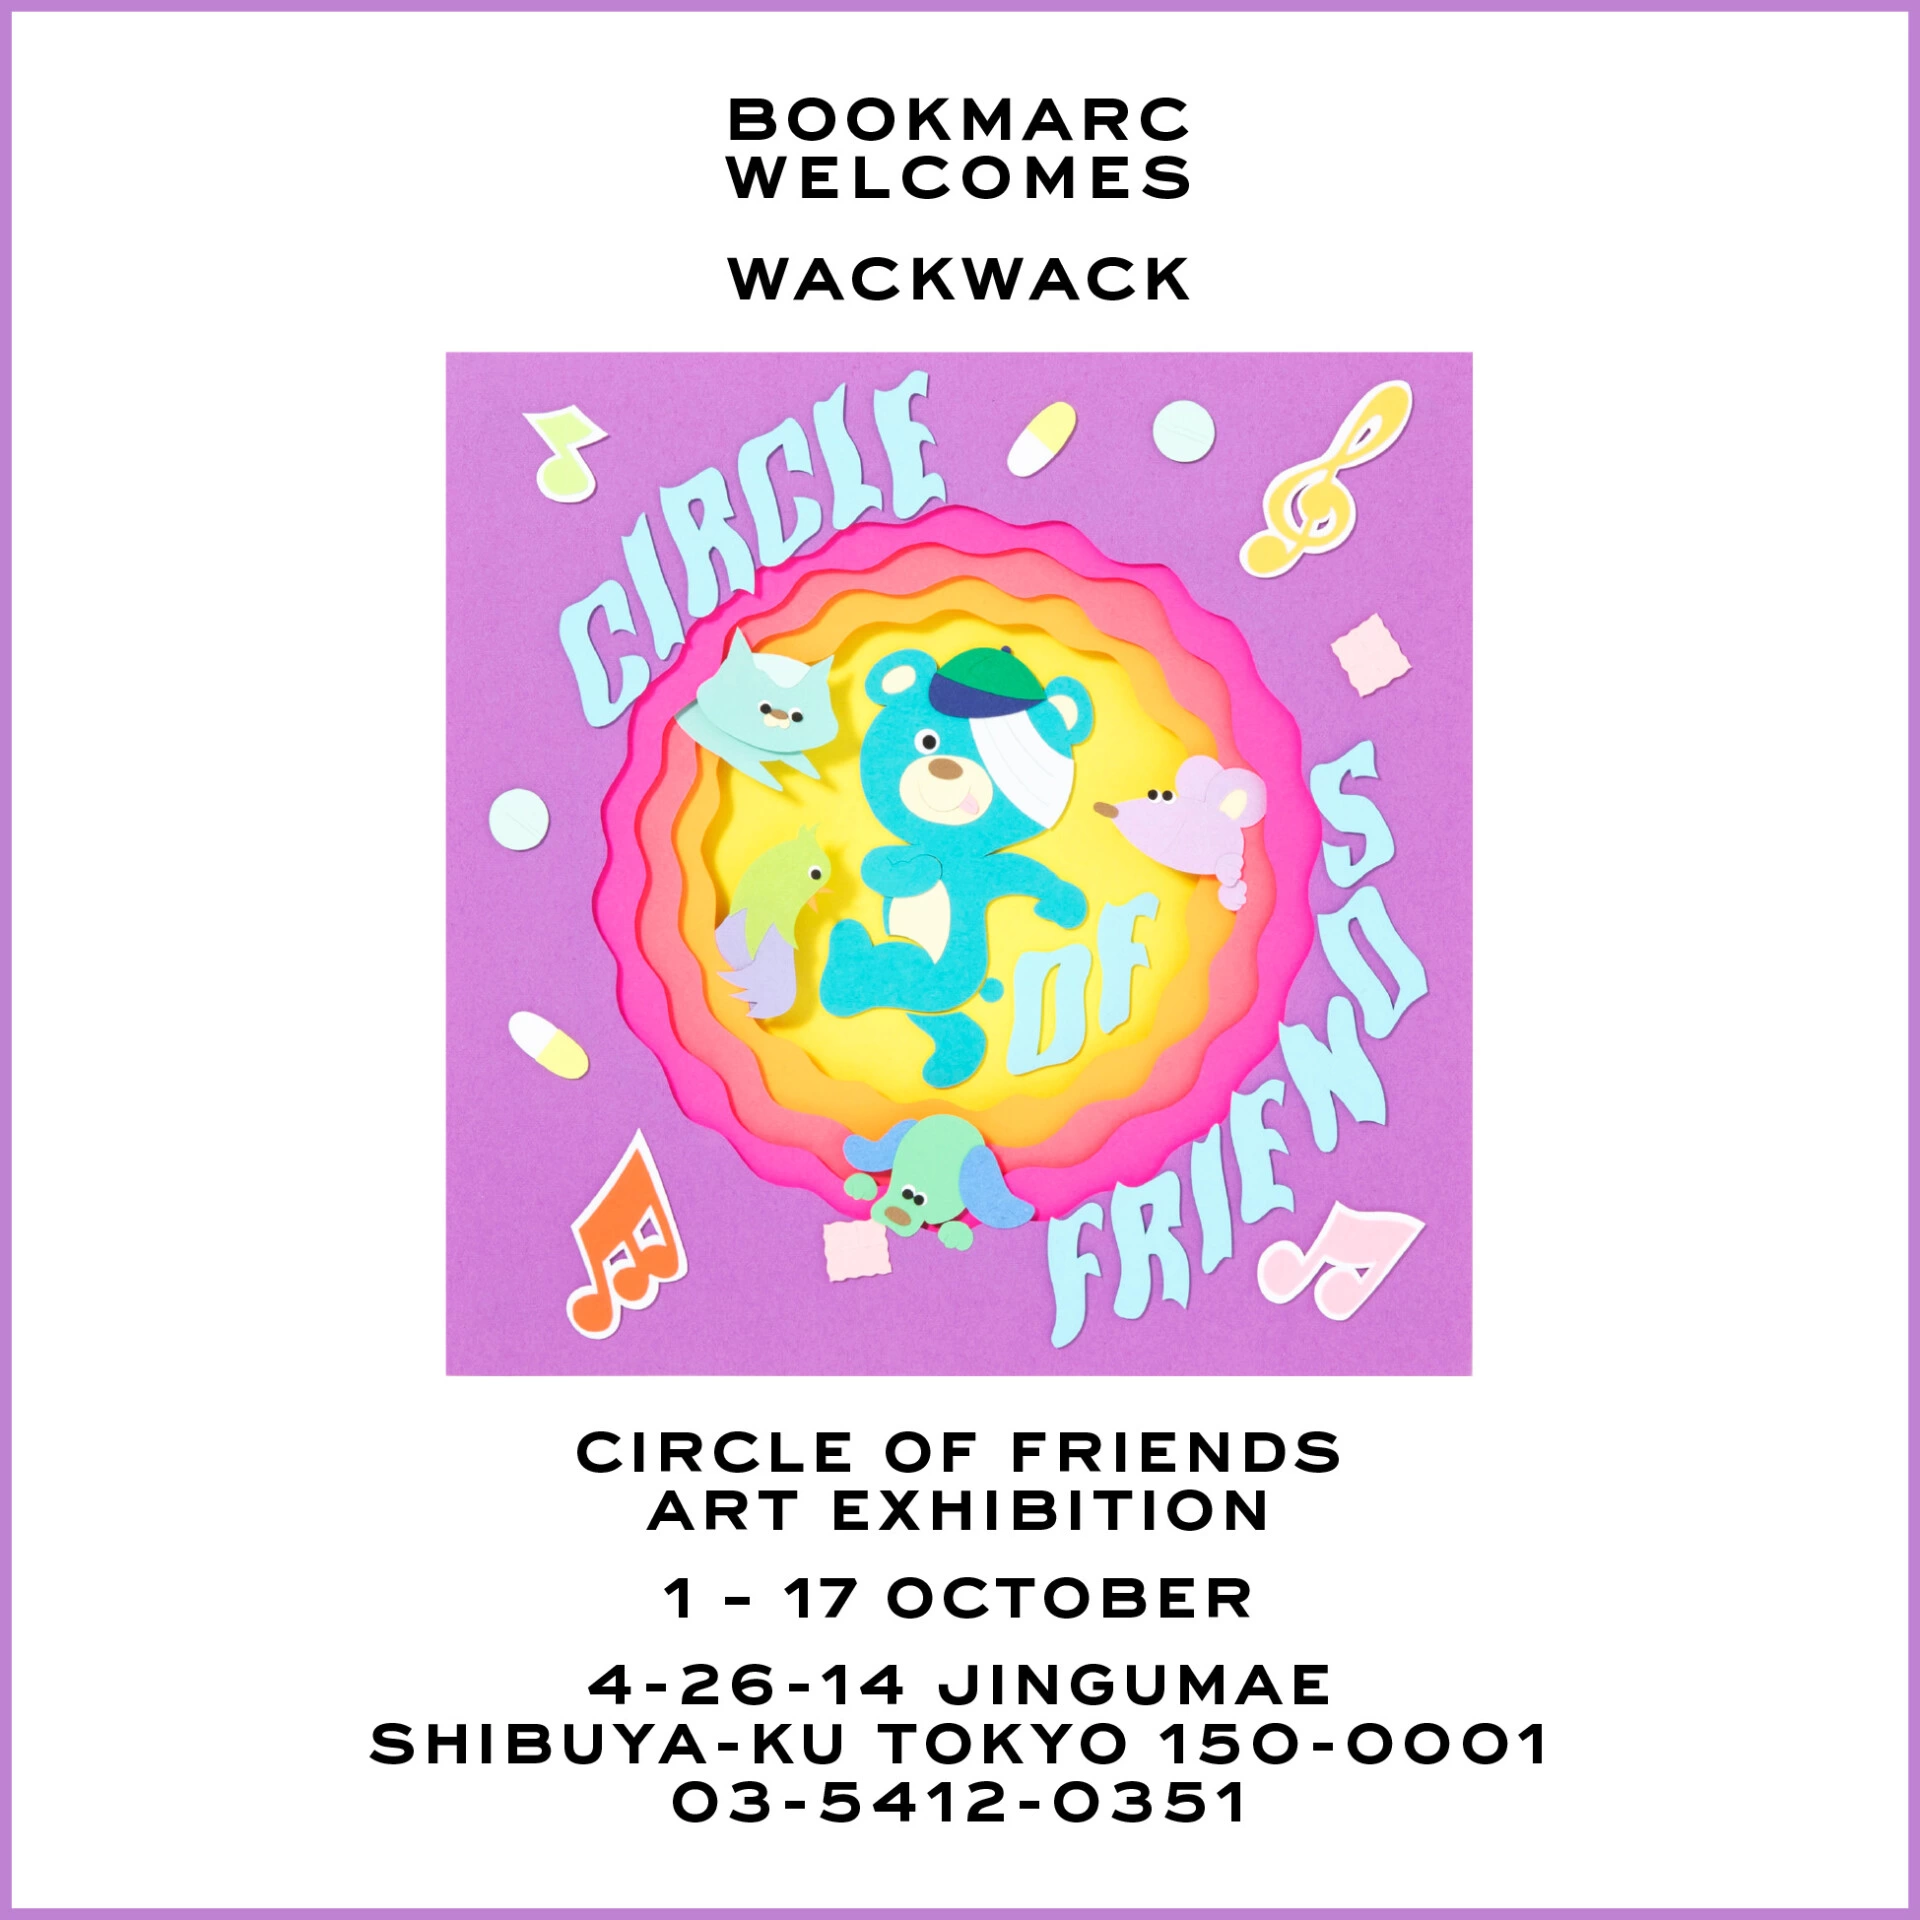 wackwack 個展 “CIRCLE OF FRIENDS”